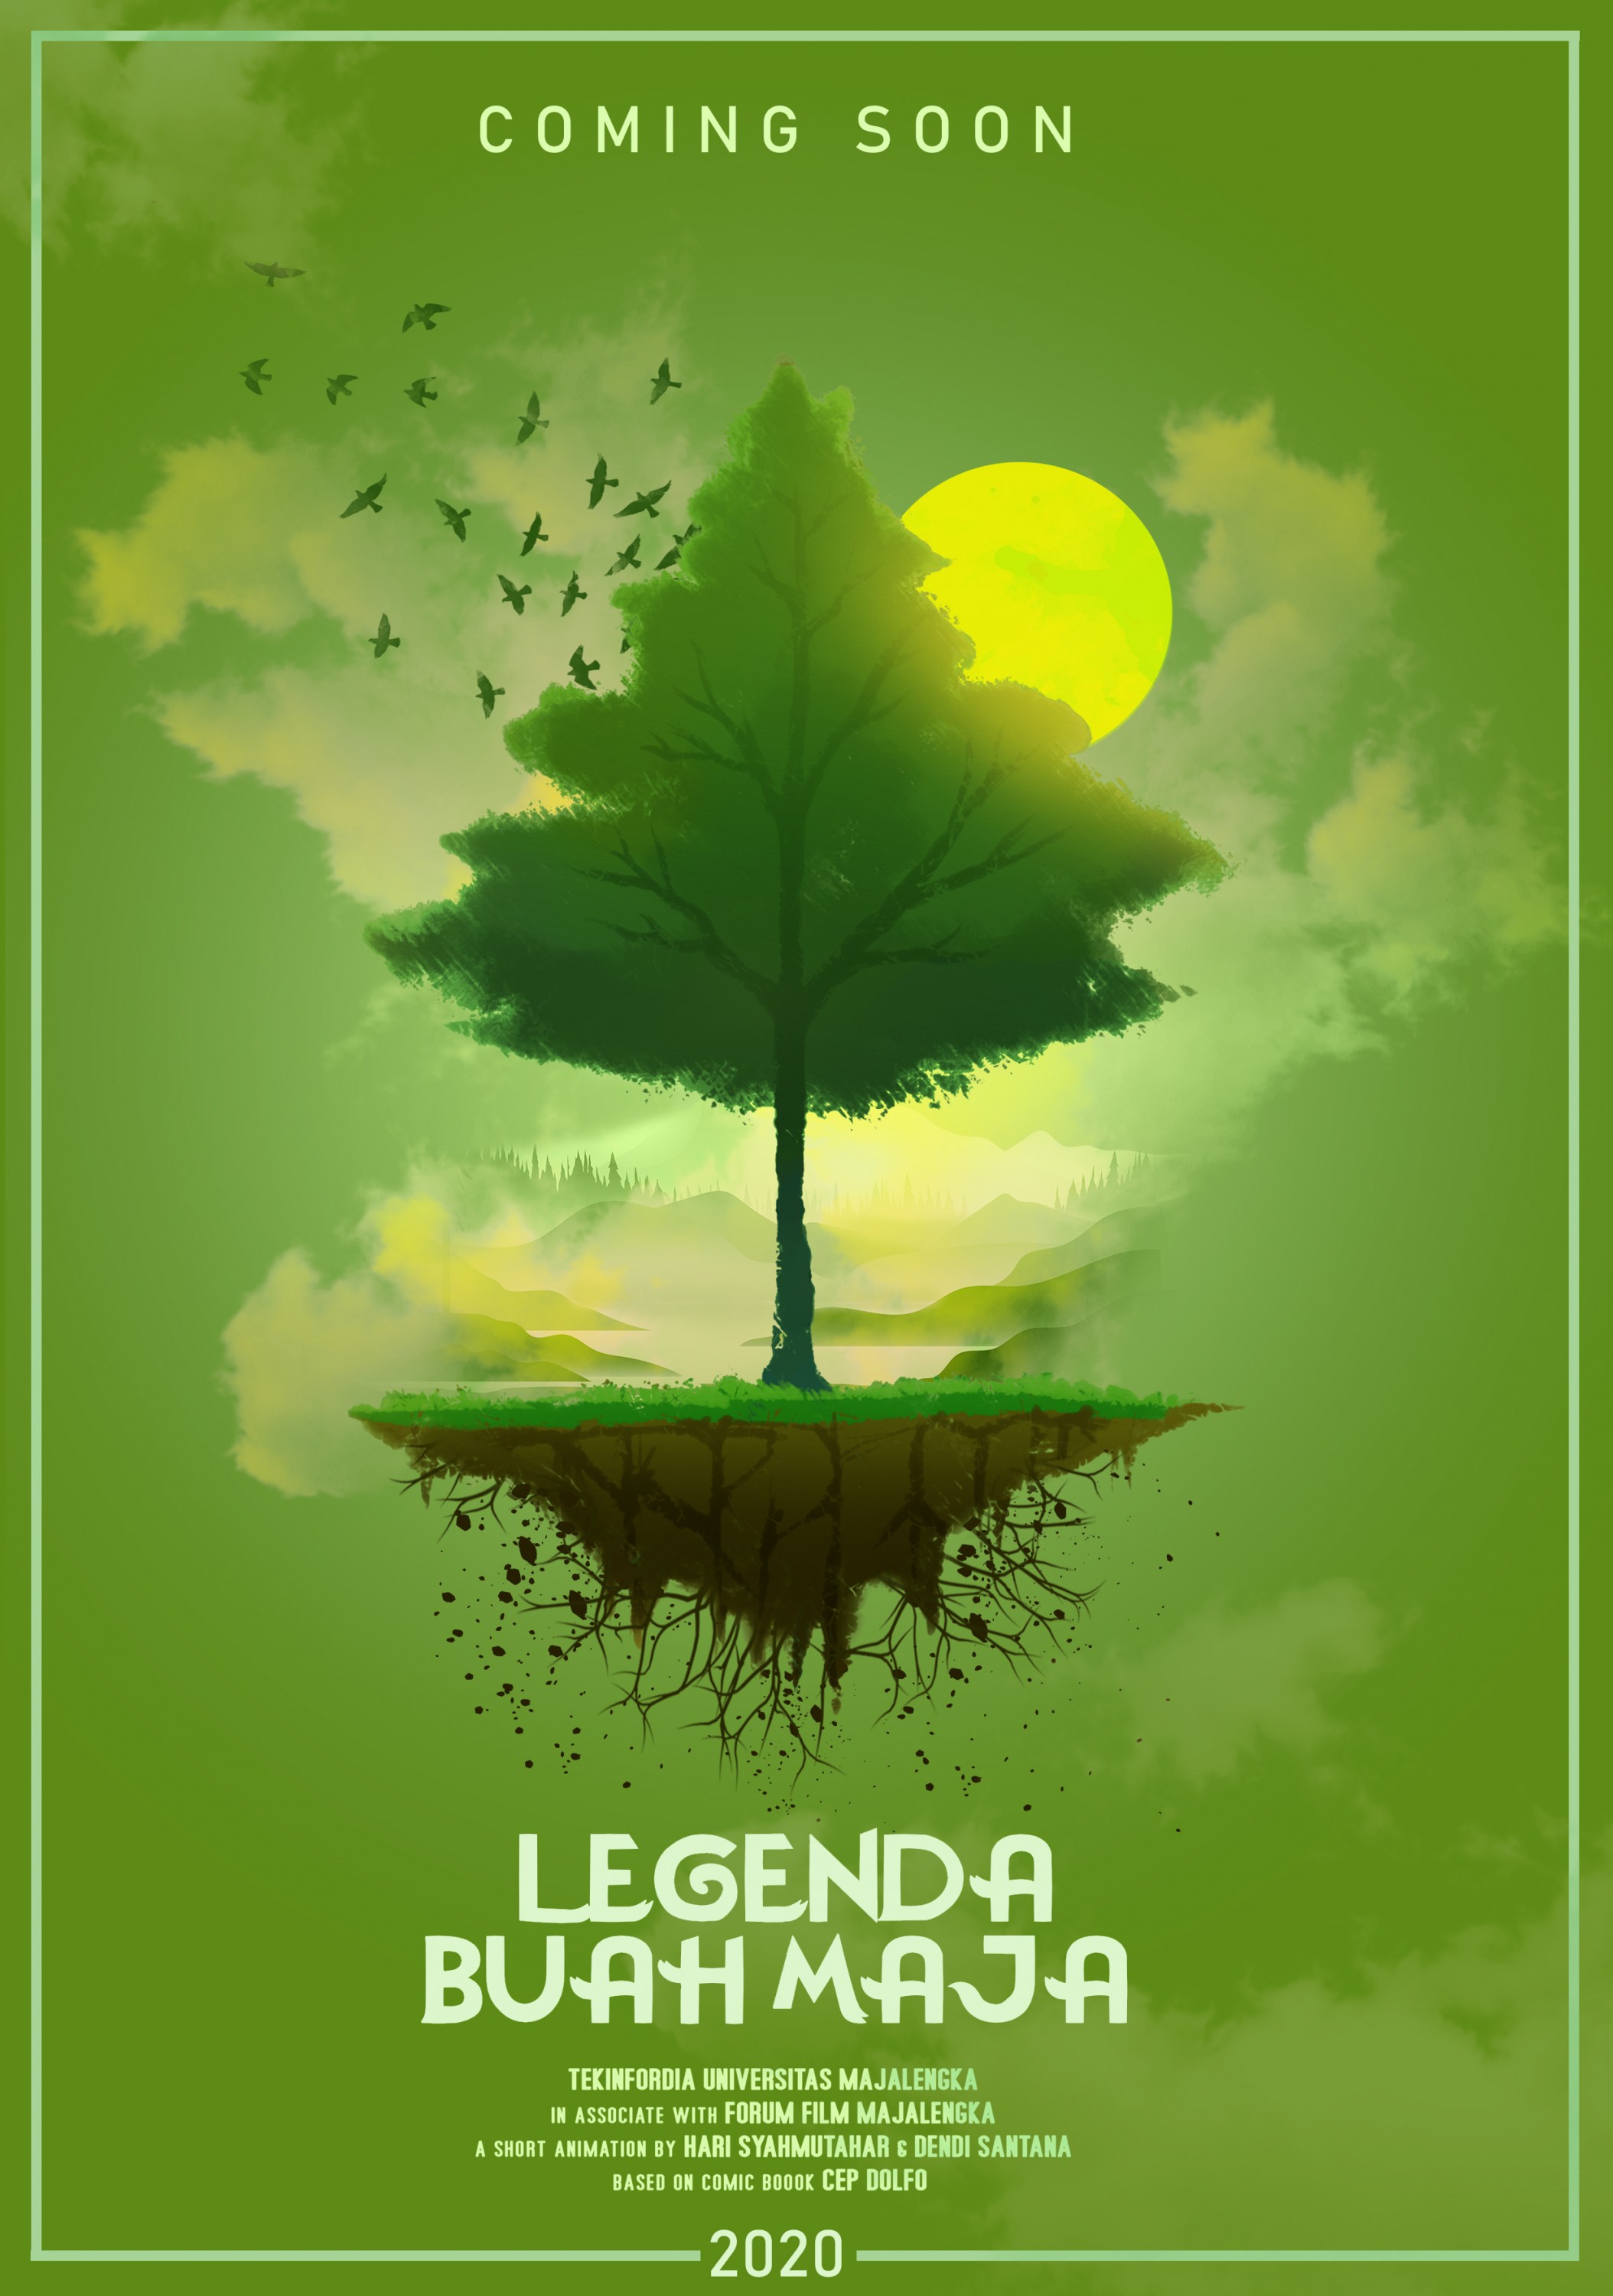 Mega Sized Movie Poster Image for Legenda Buah Maja